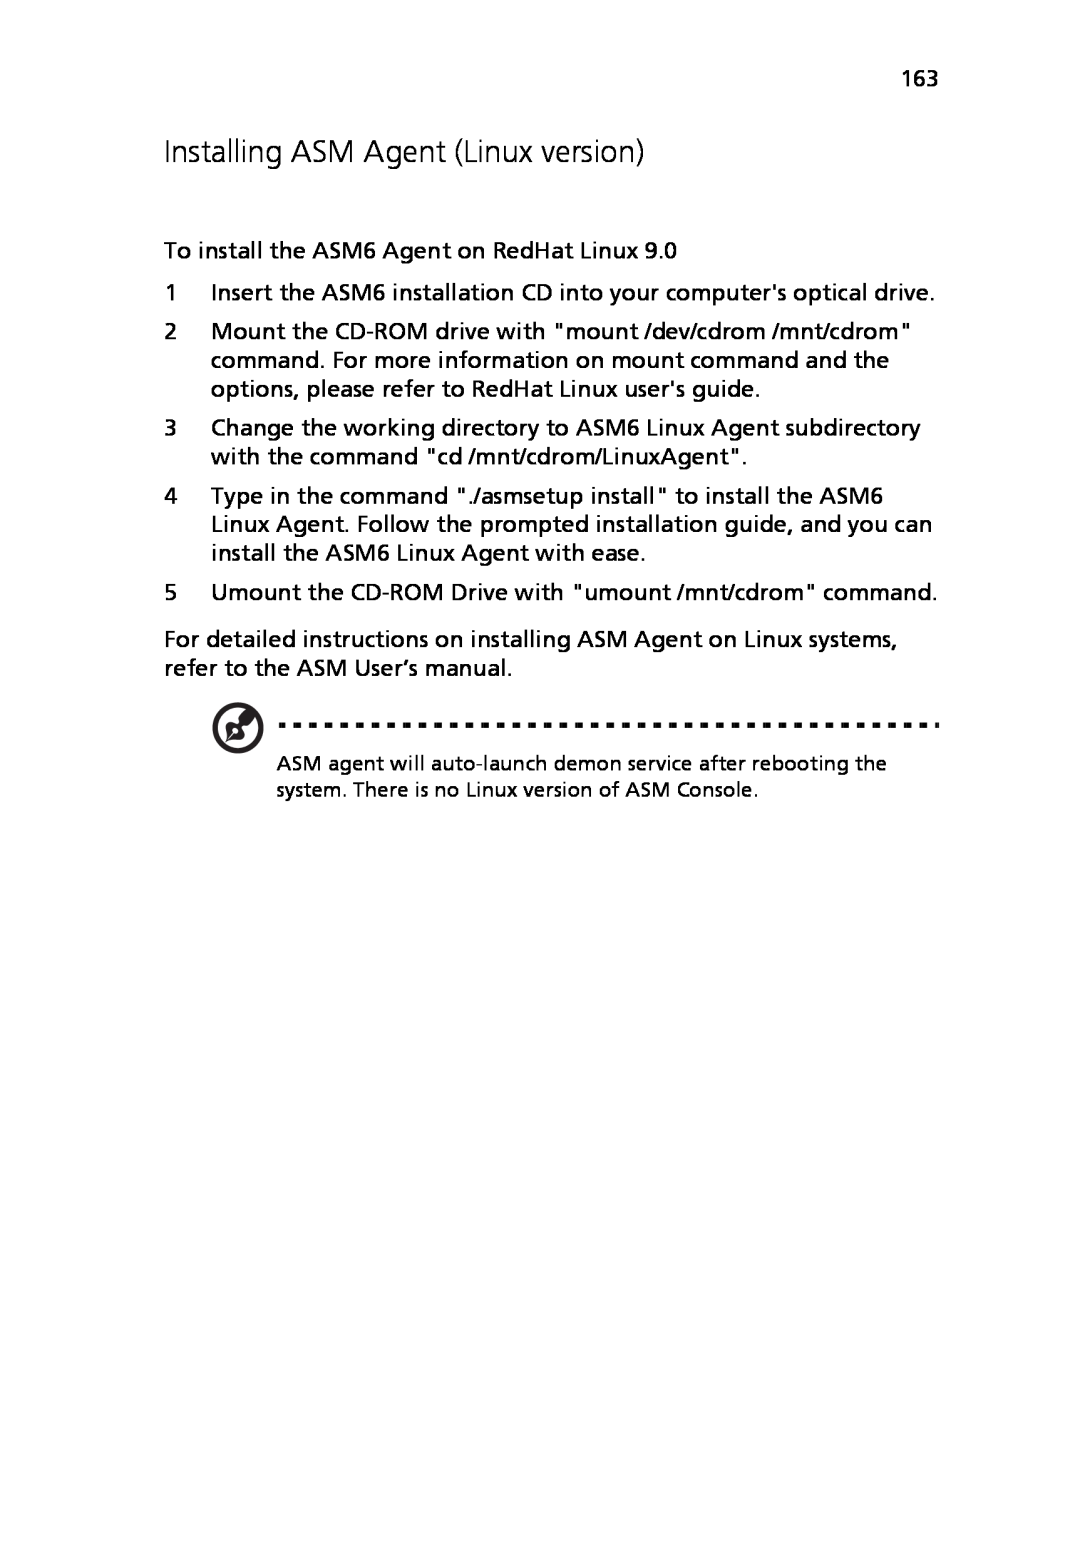 Acer Altos R710 manual Installing ASM Agent Linux version 